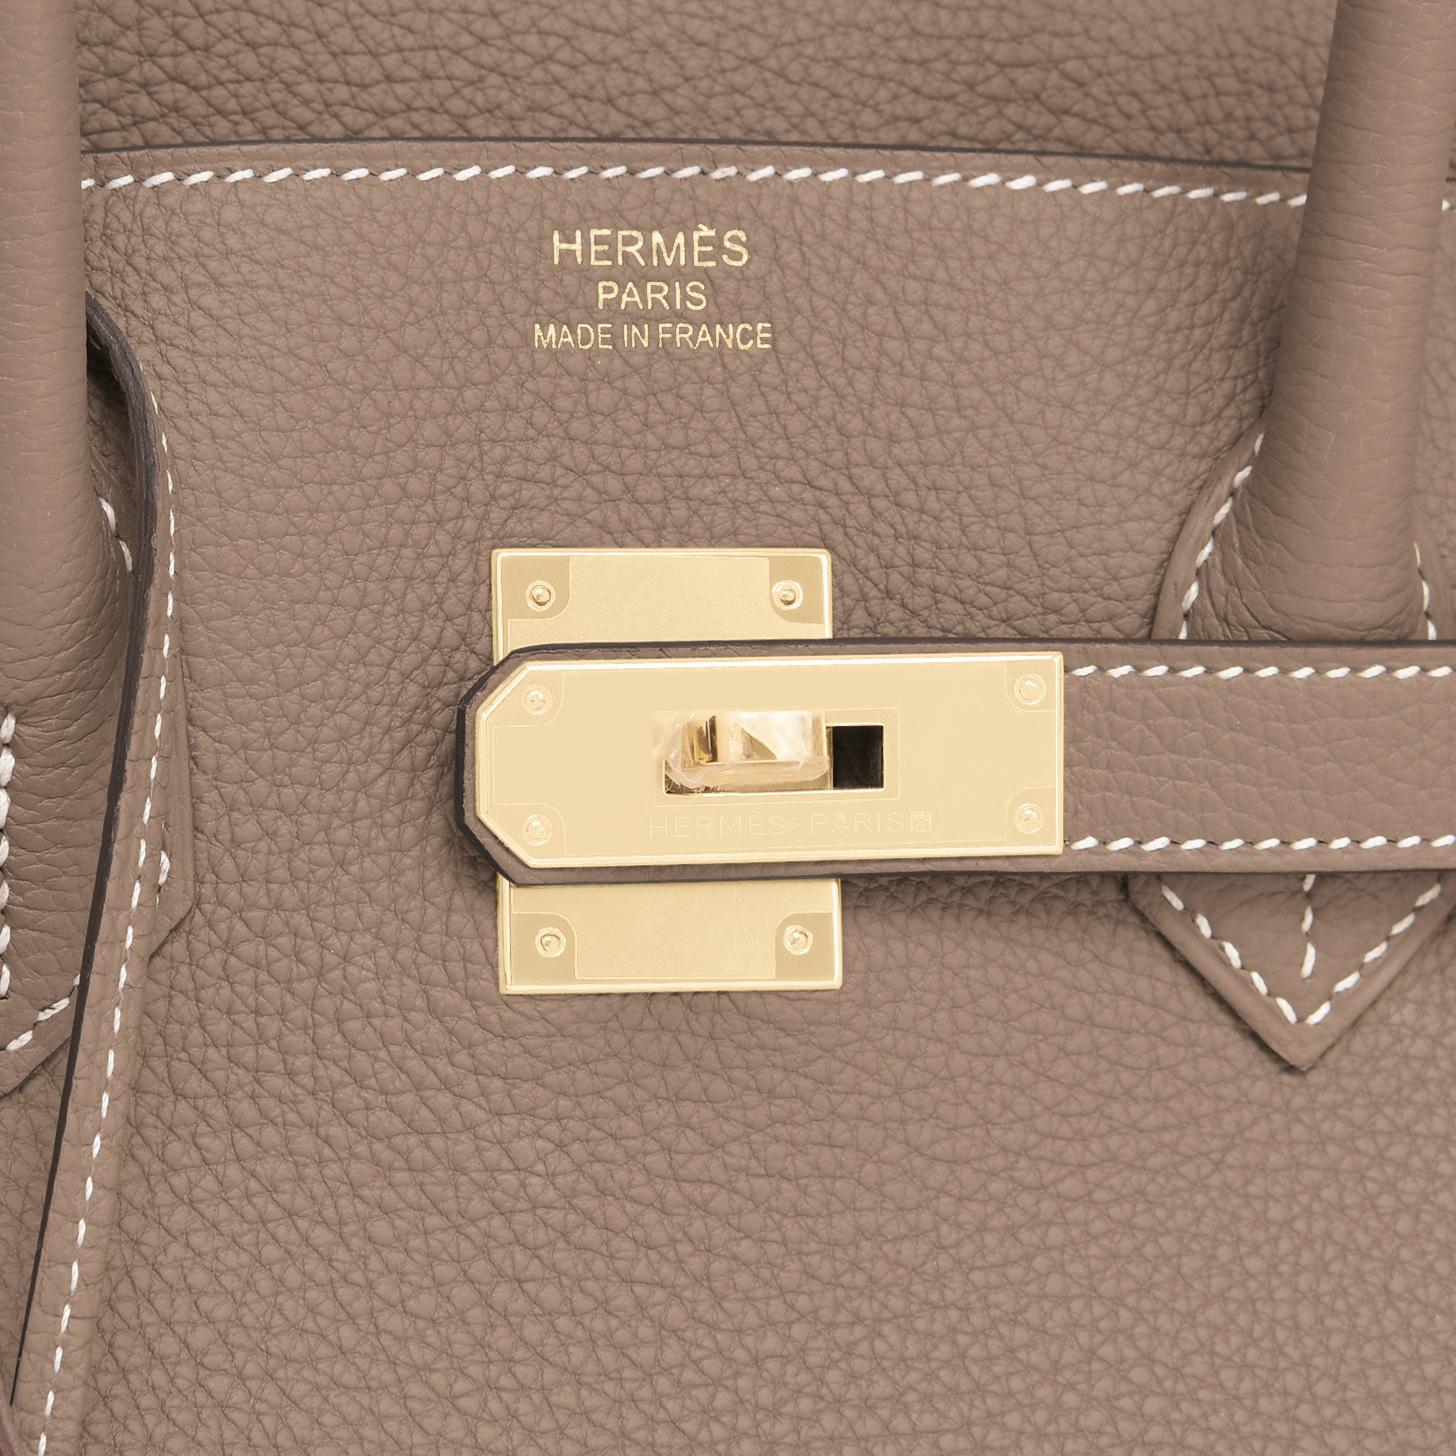 Hermes Birkin 35cm Etoupe Togo Taupe Gold Hardware Bag NEW 3